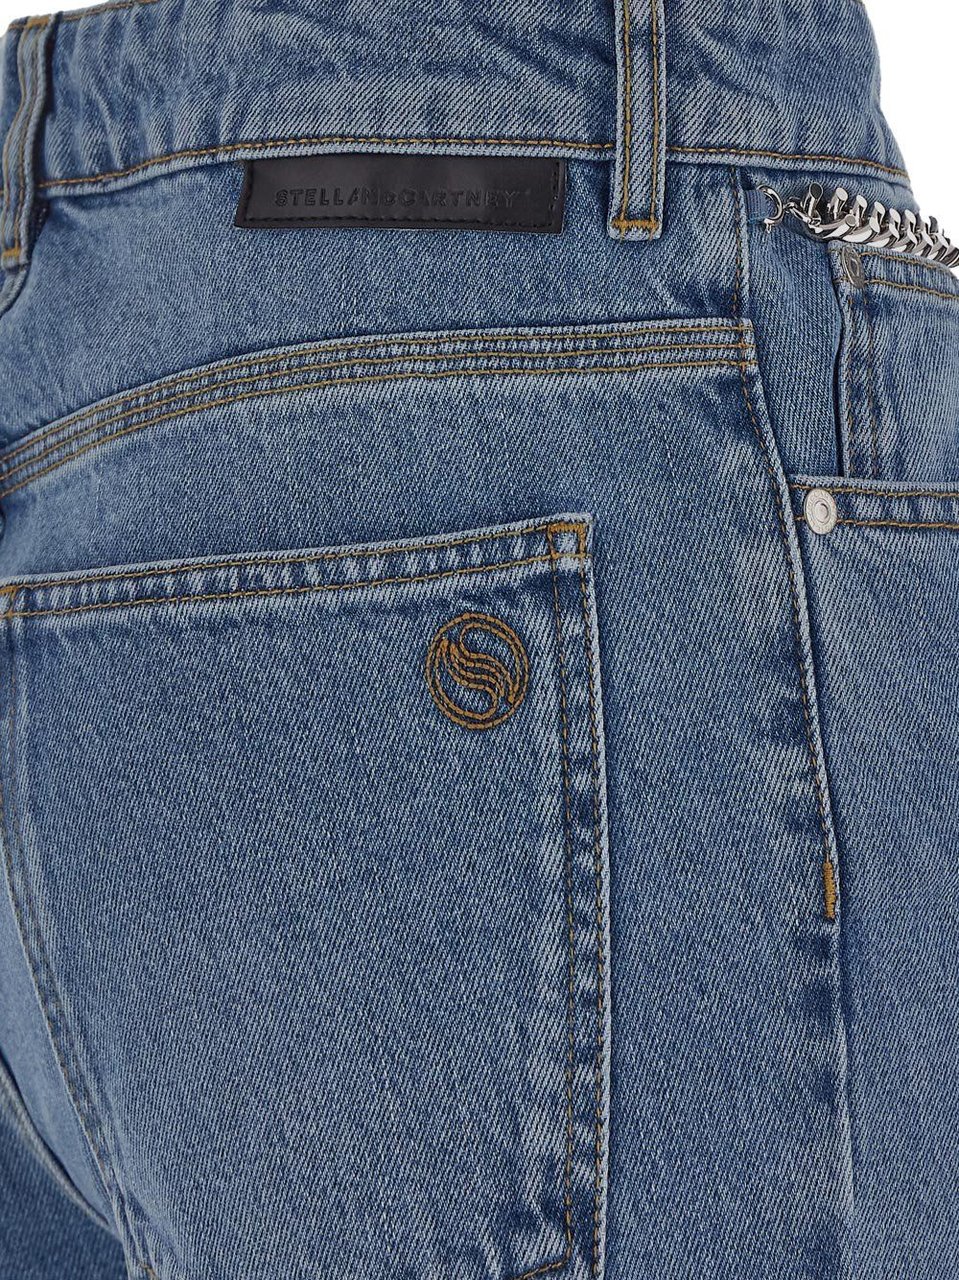 Stella McCartney Iconic Falabella Jeans Blauw